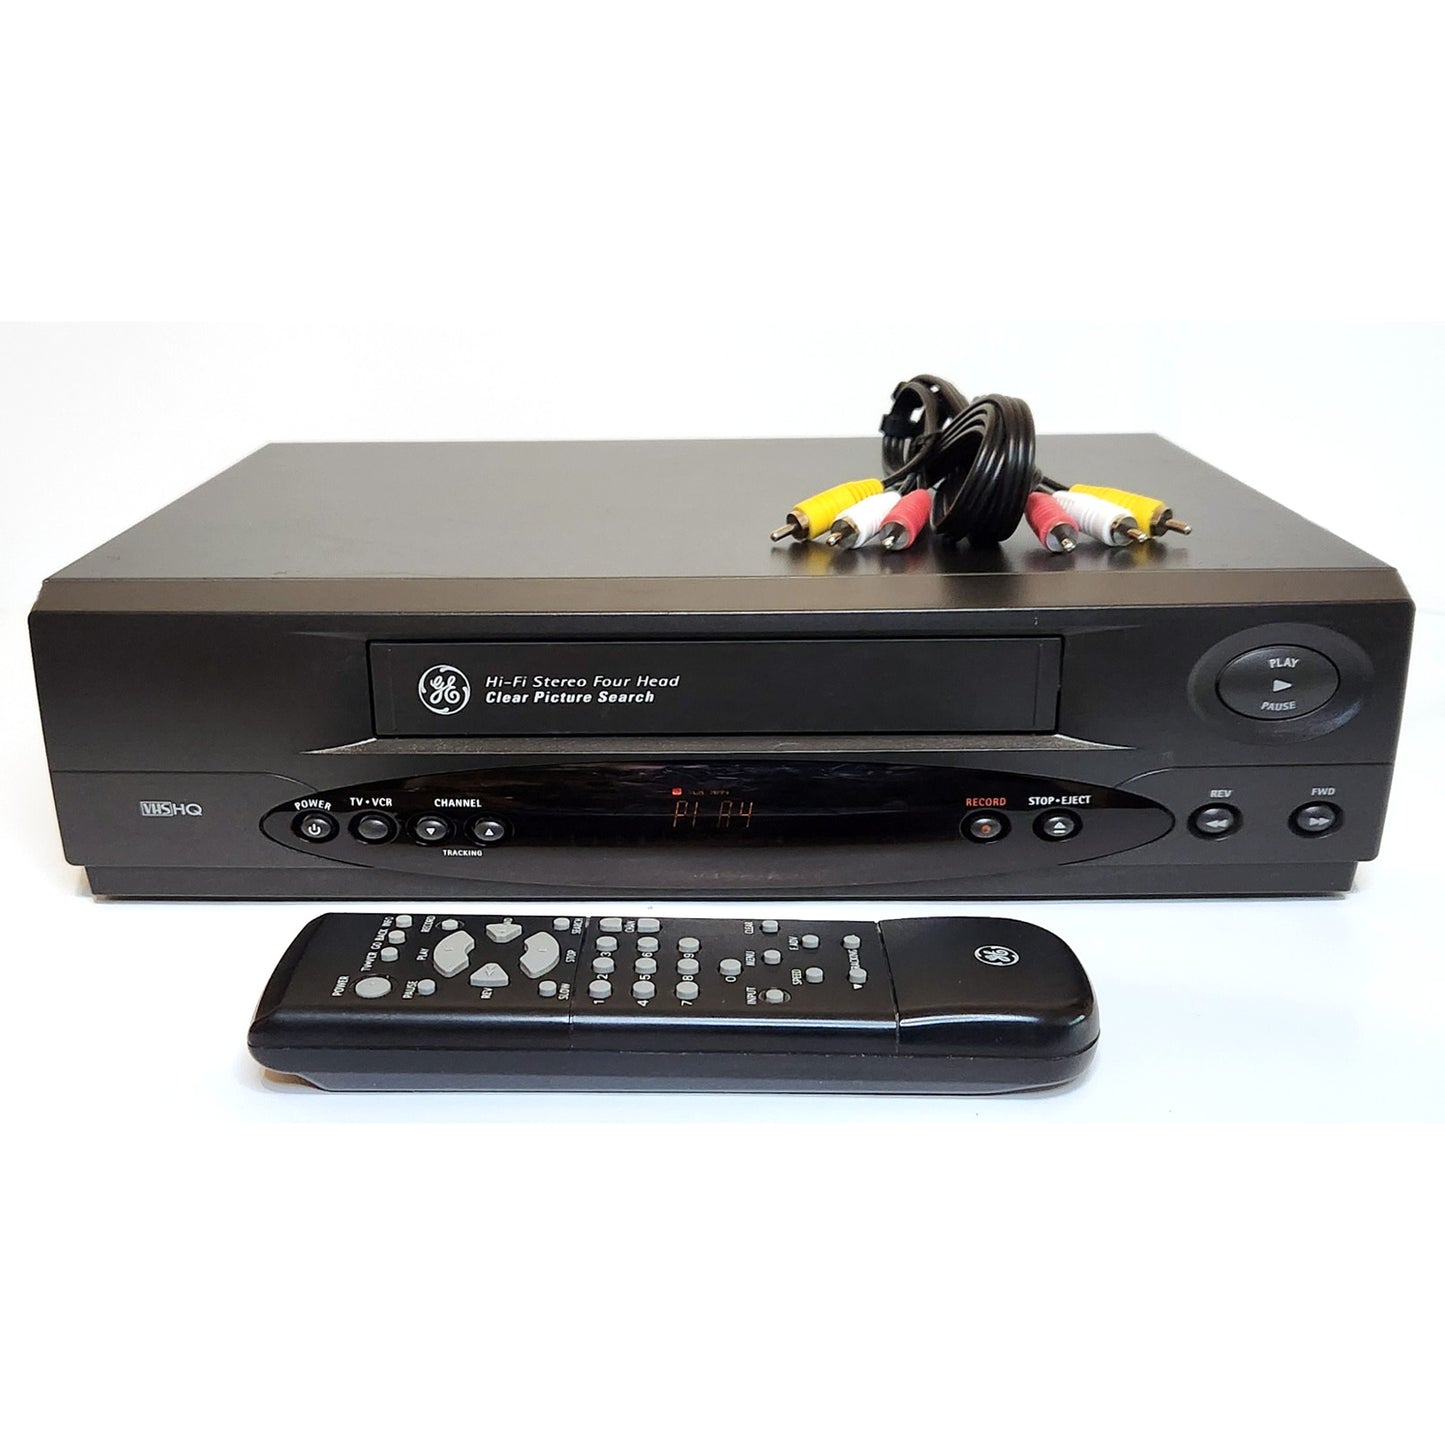 GE VG4064 video cassette player 4 Head VCR plus + VHS Player - No